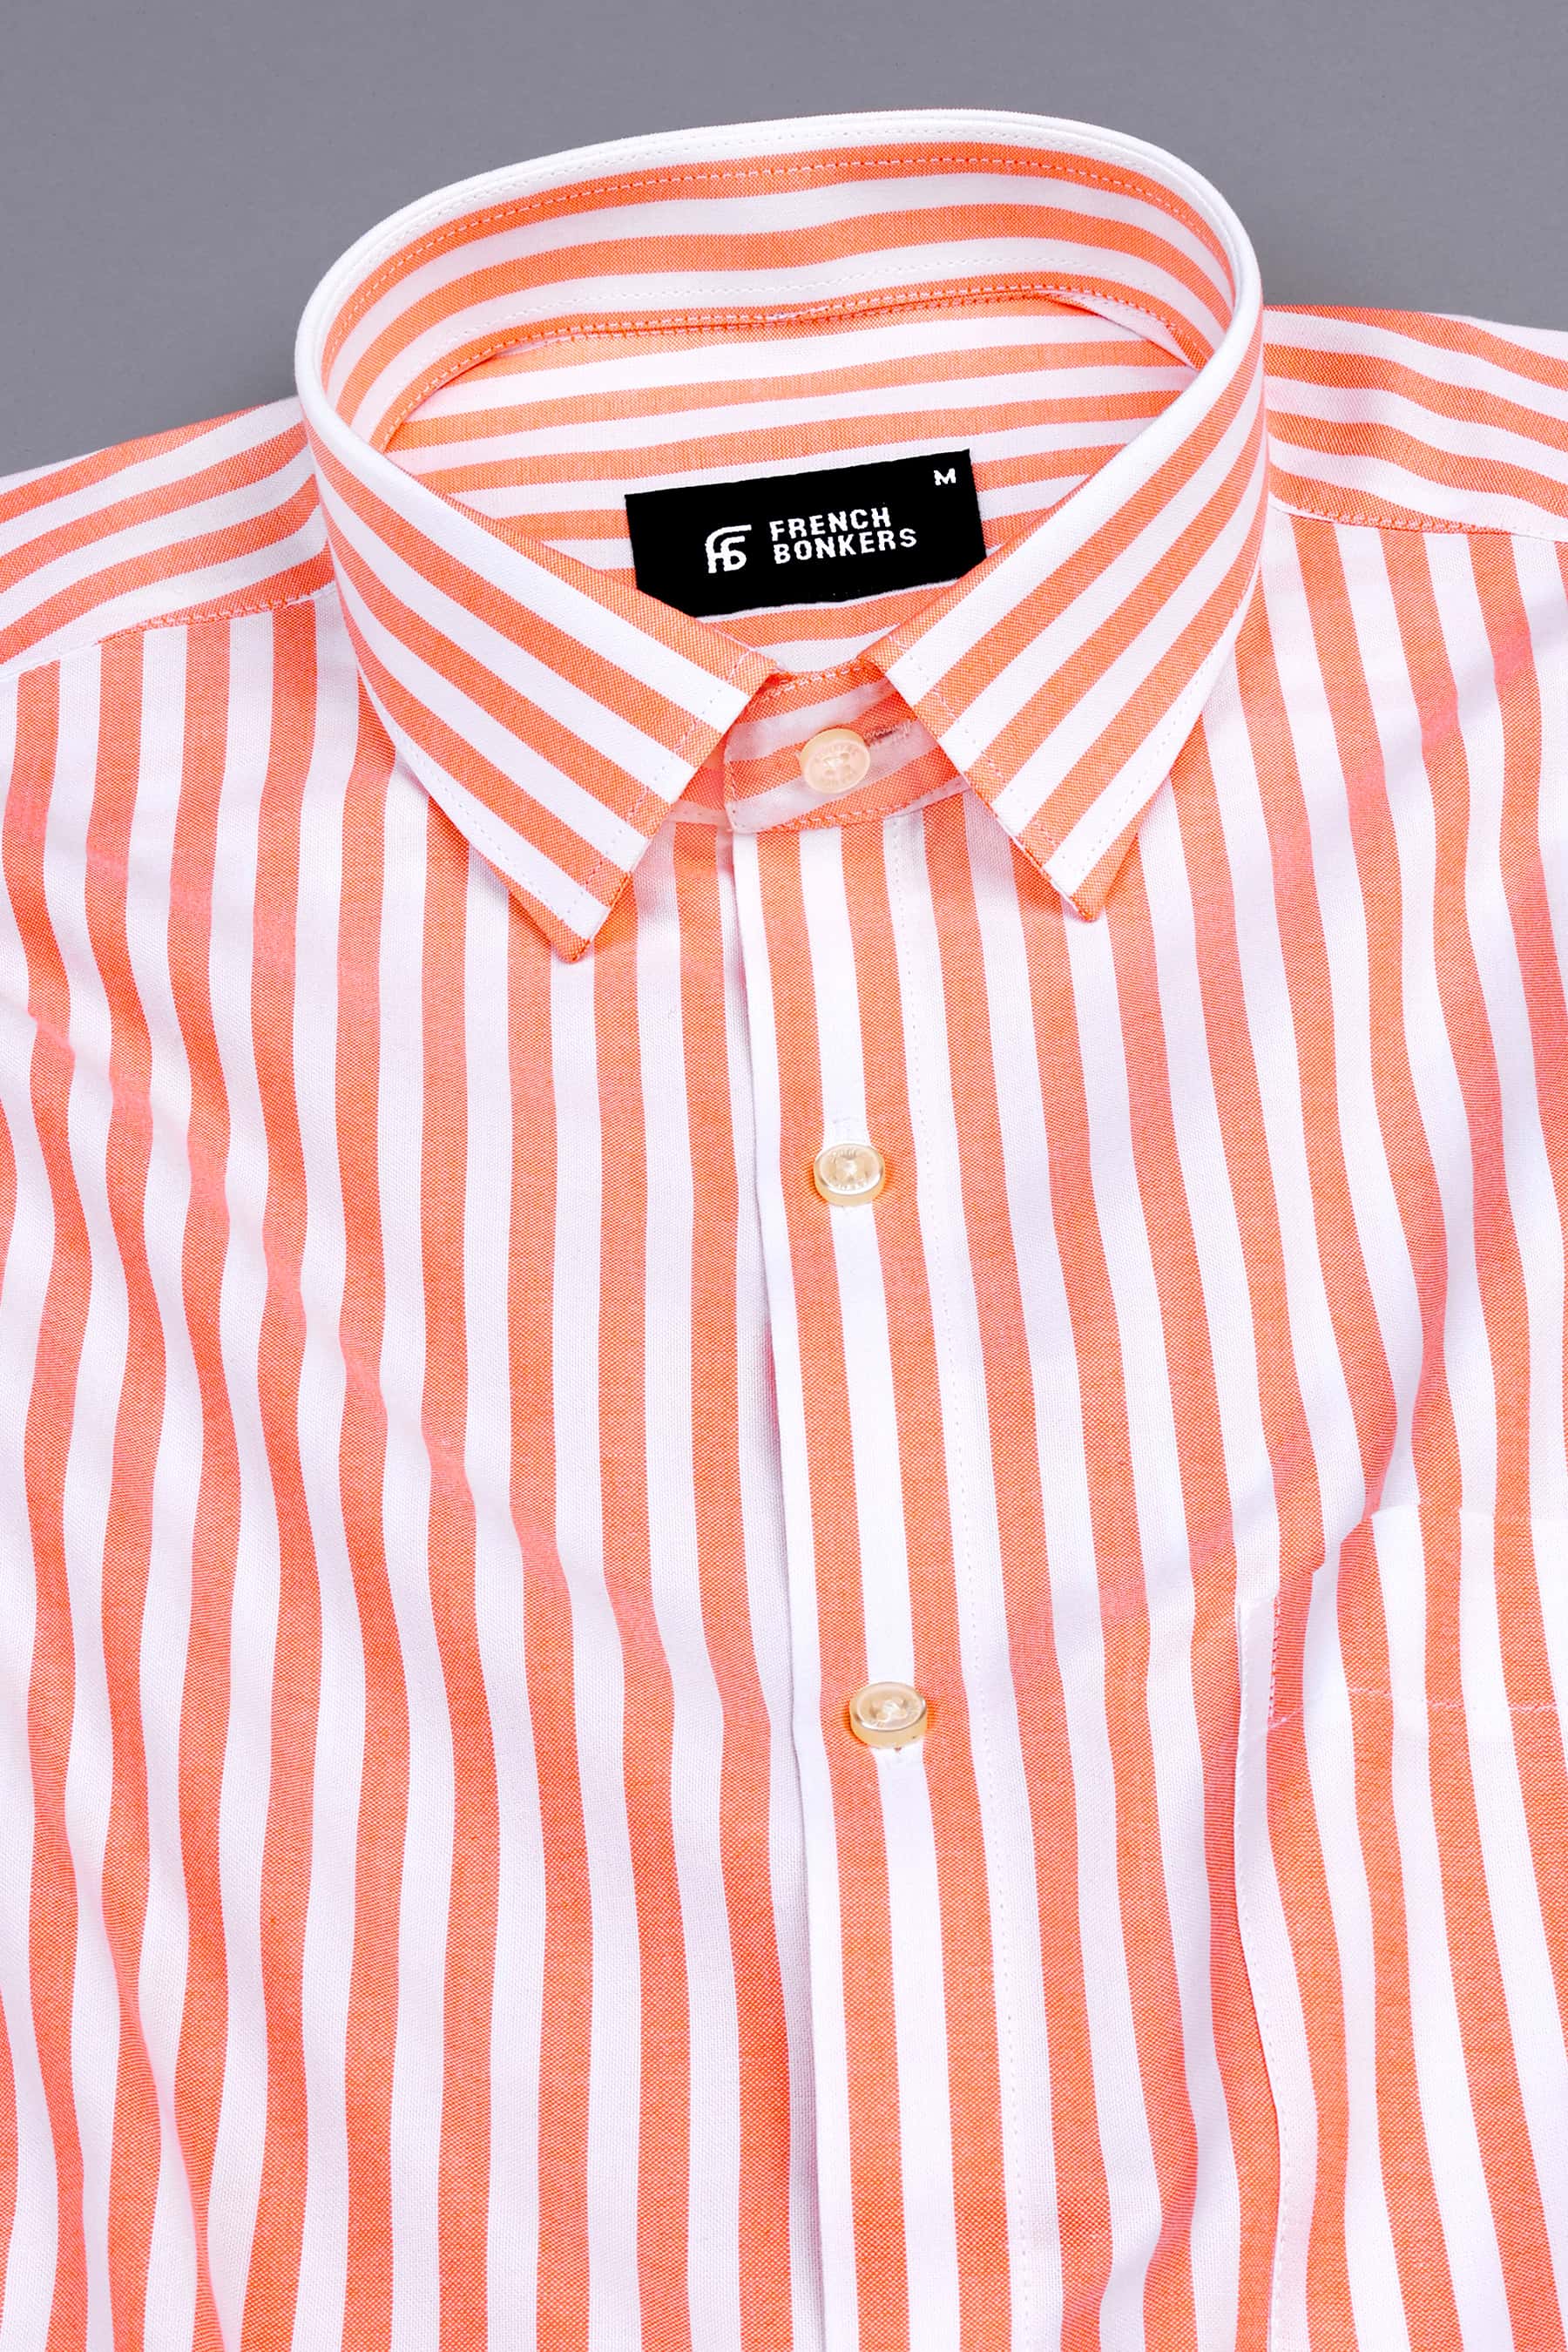 Cantaloupe orange with white oxford bengal stripe shirt